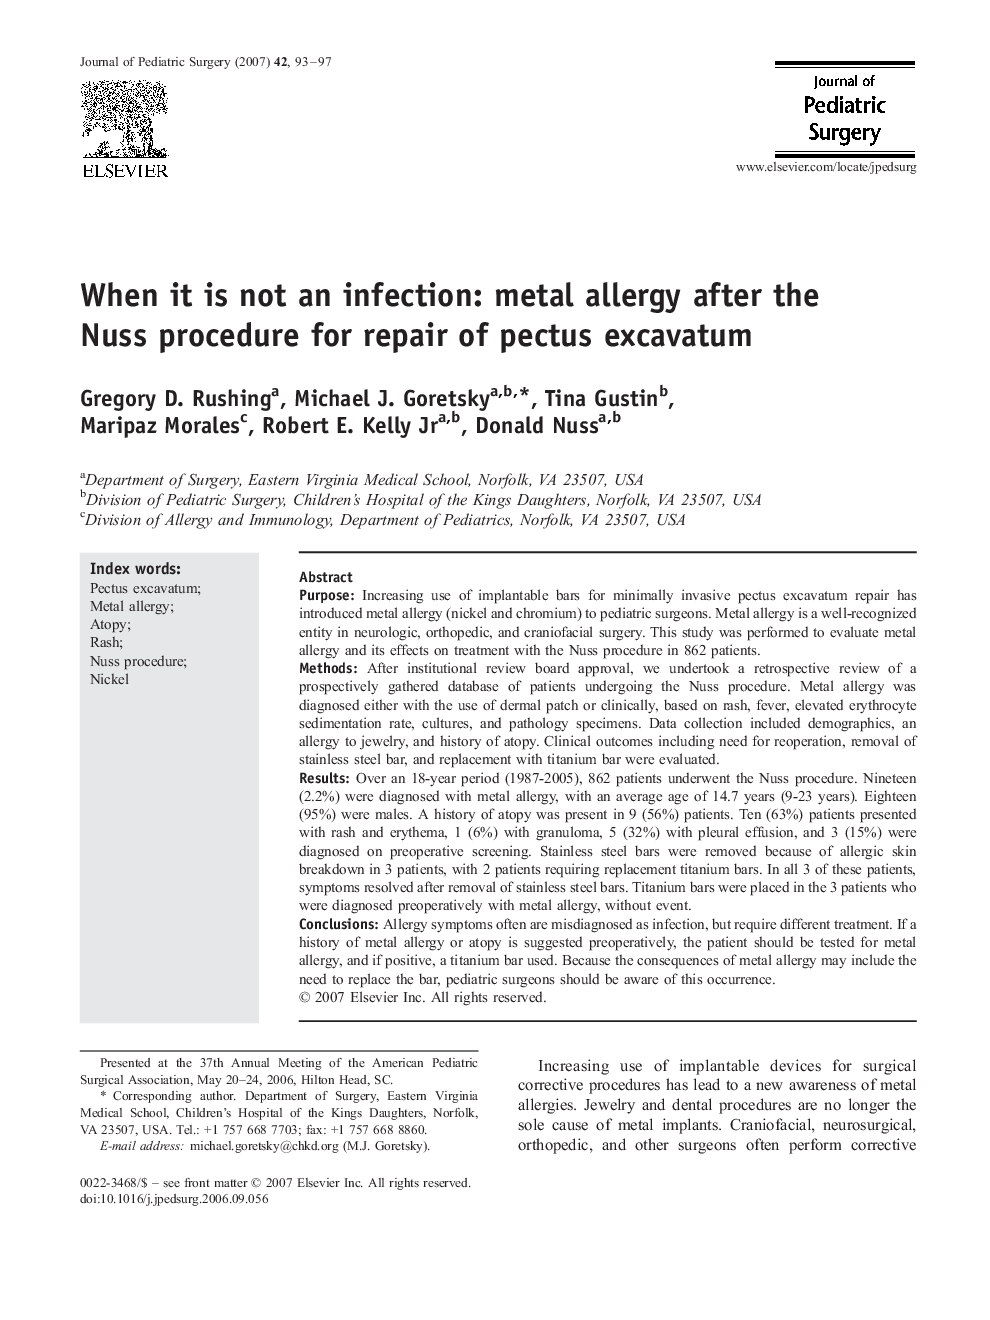 When it is not an infection: metal allergy after the Nuss procedure for repair of pectus excavatum 